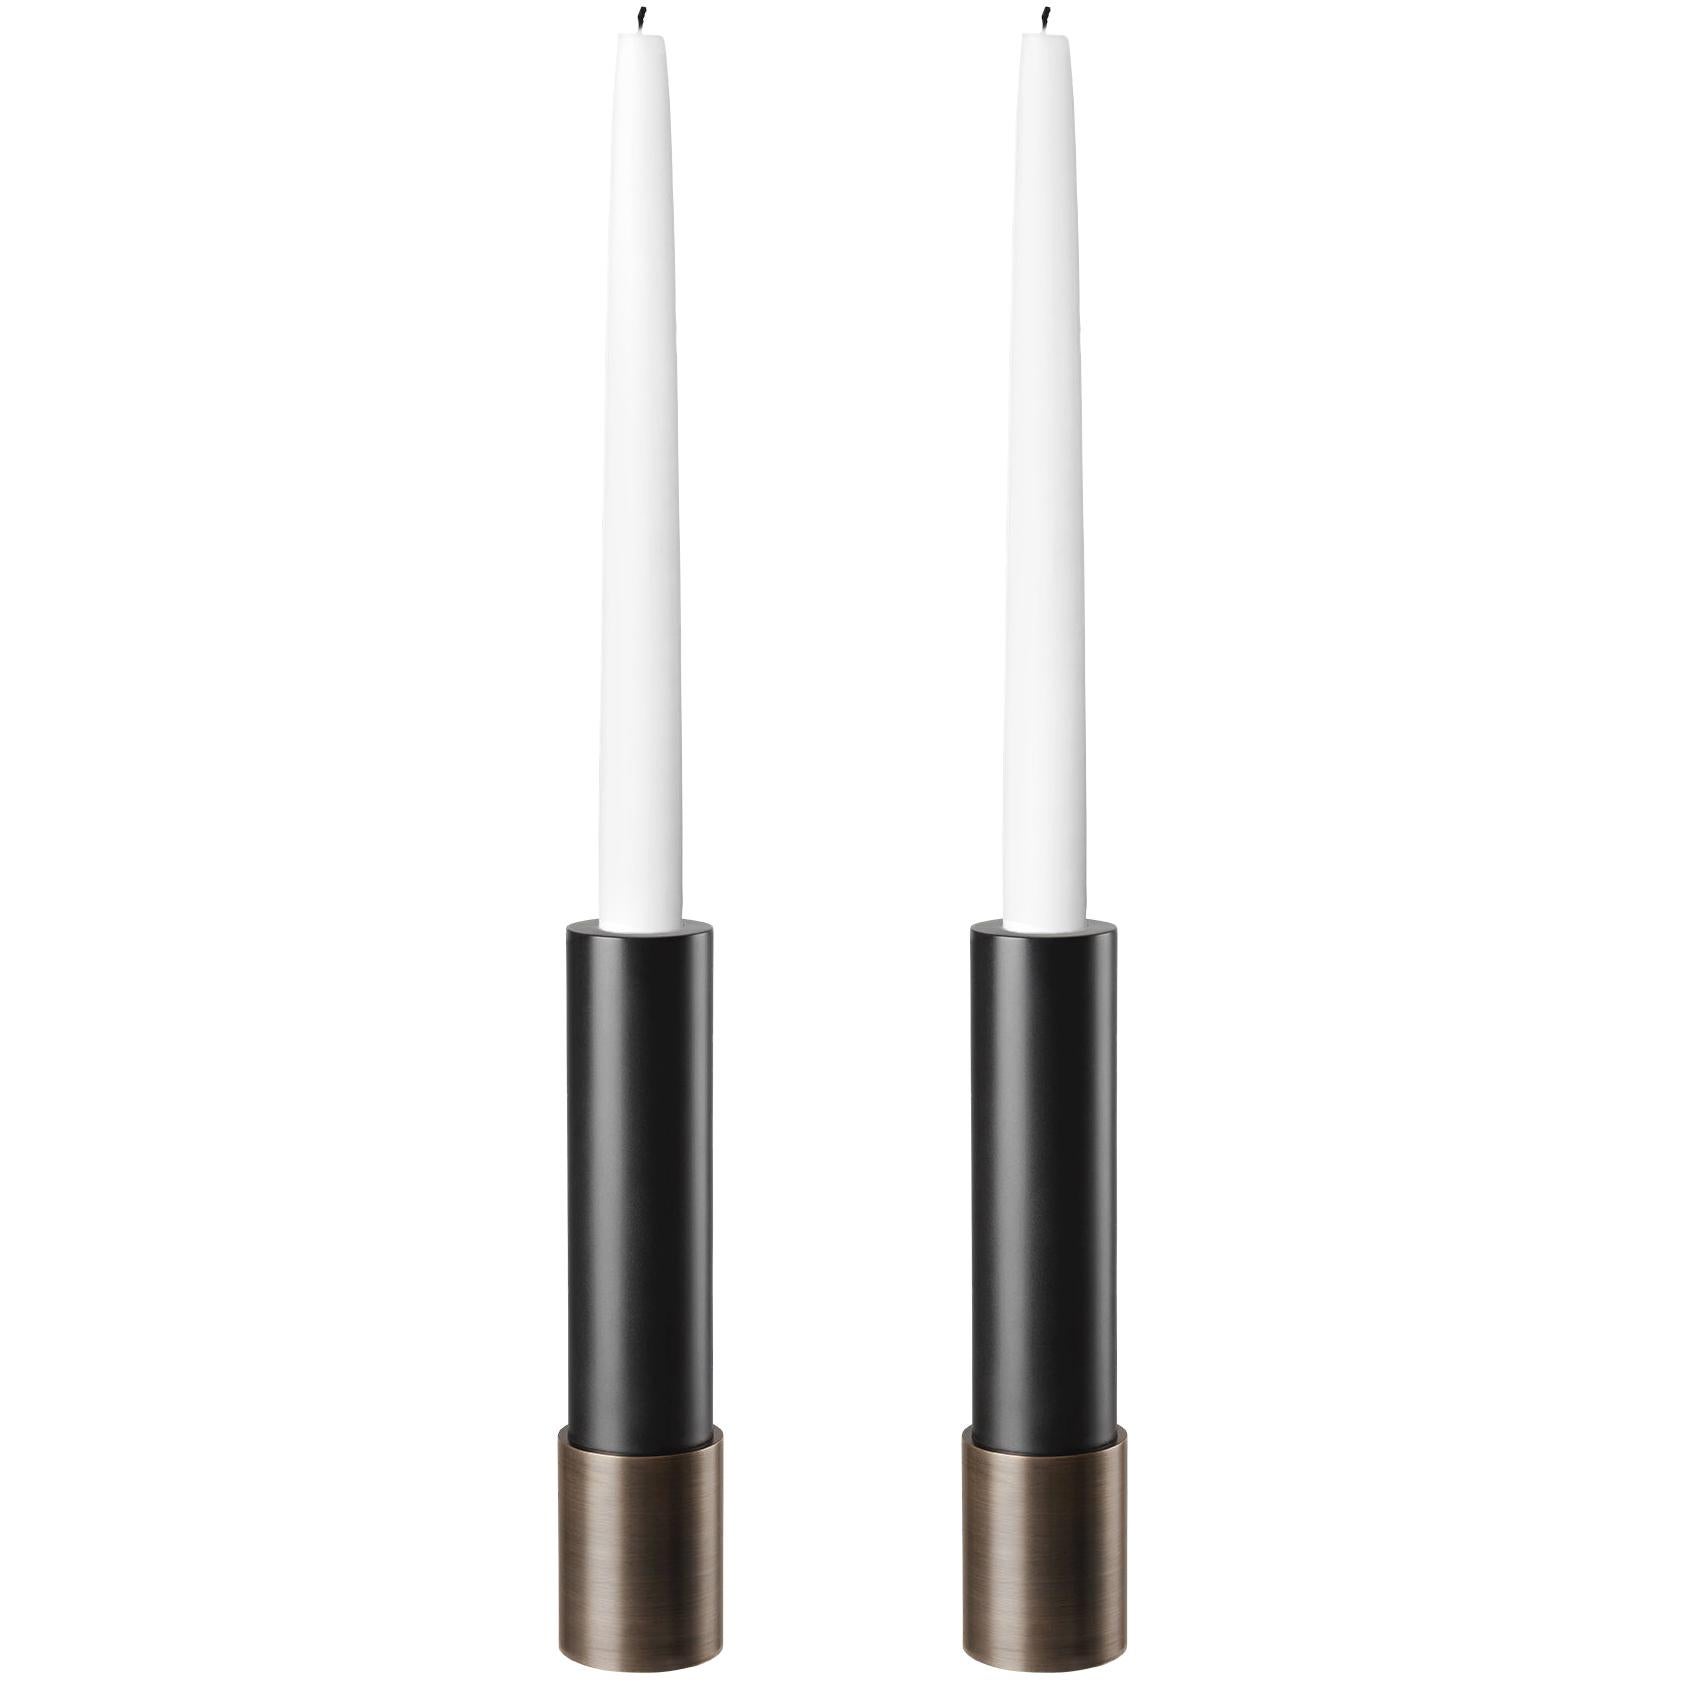 Pair of Candlesticks Model #20 by Space Copenhagen for GUBI